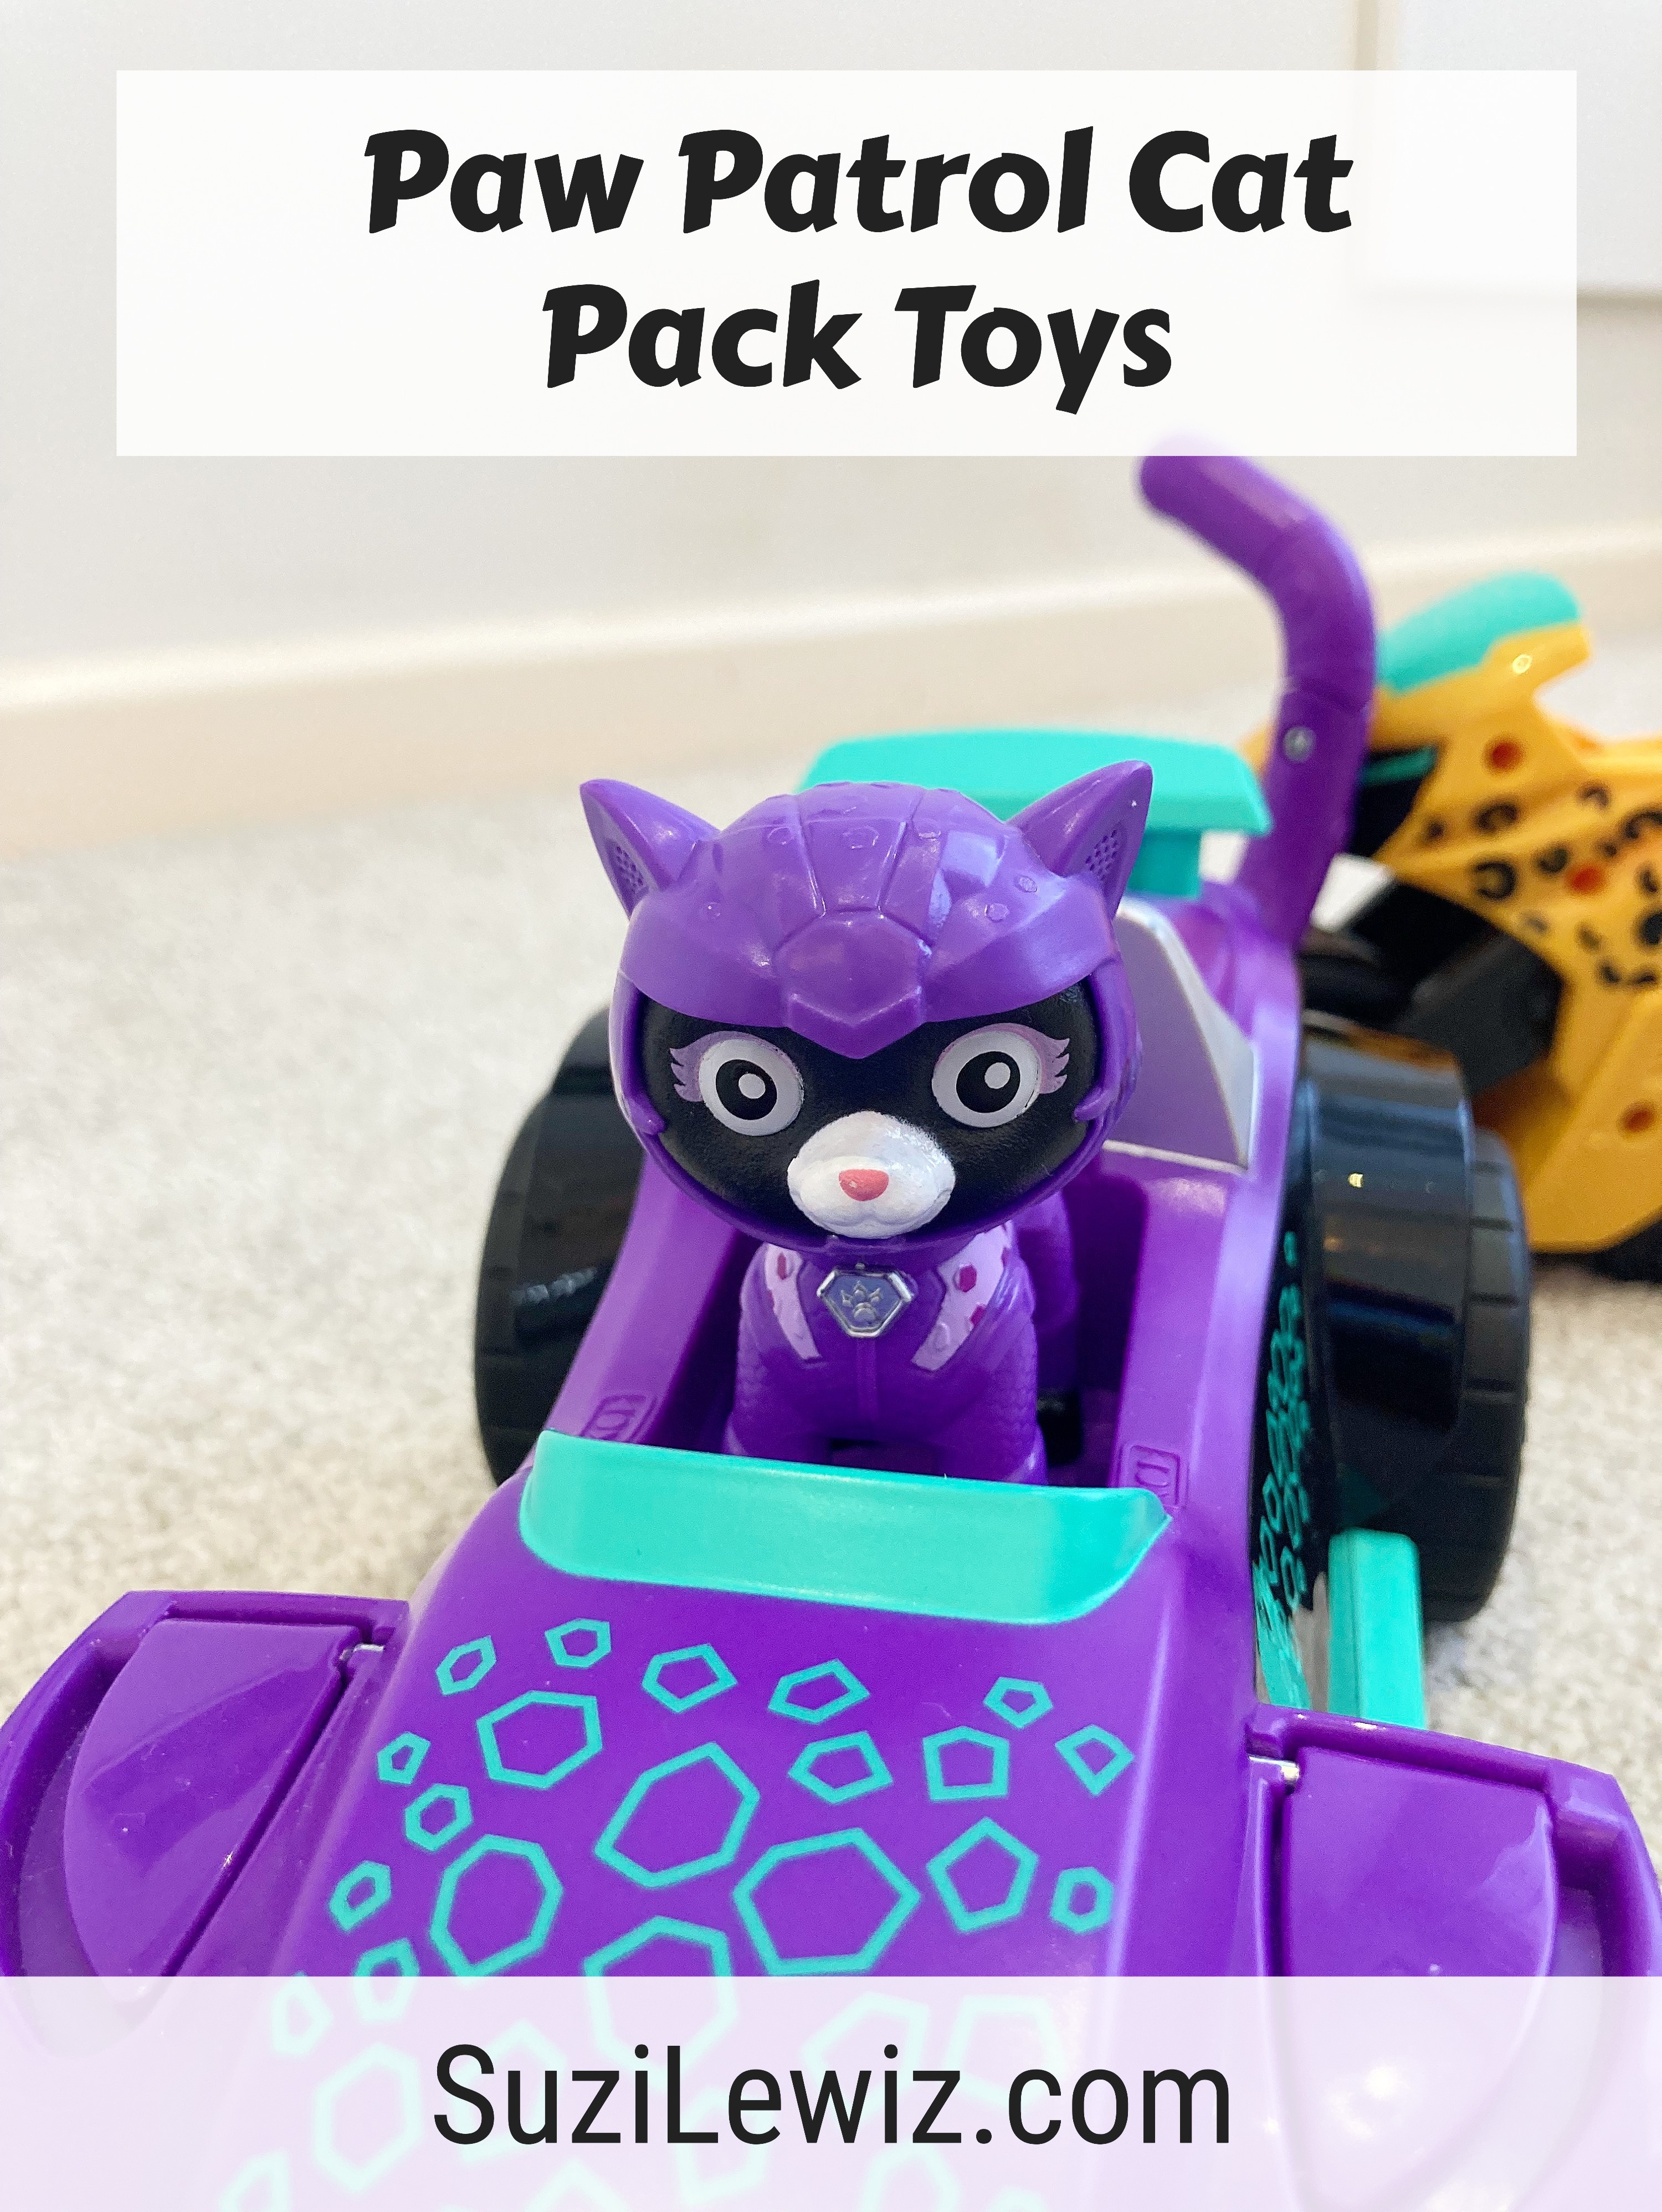 New Paw Patrol Cat Pack Toys - Suzi Lewiz